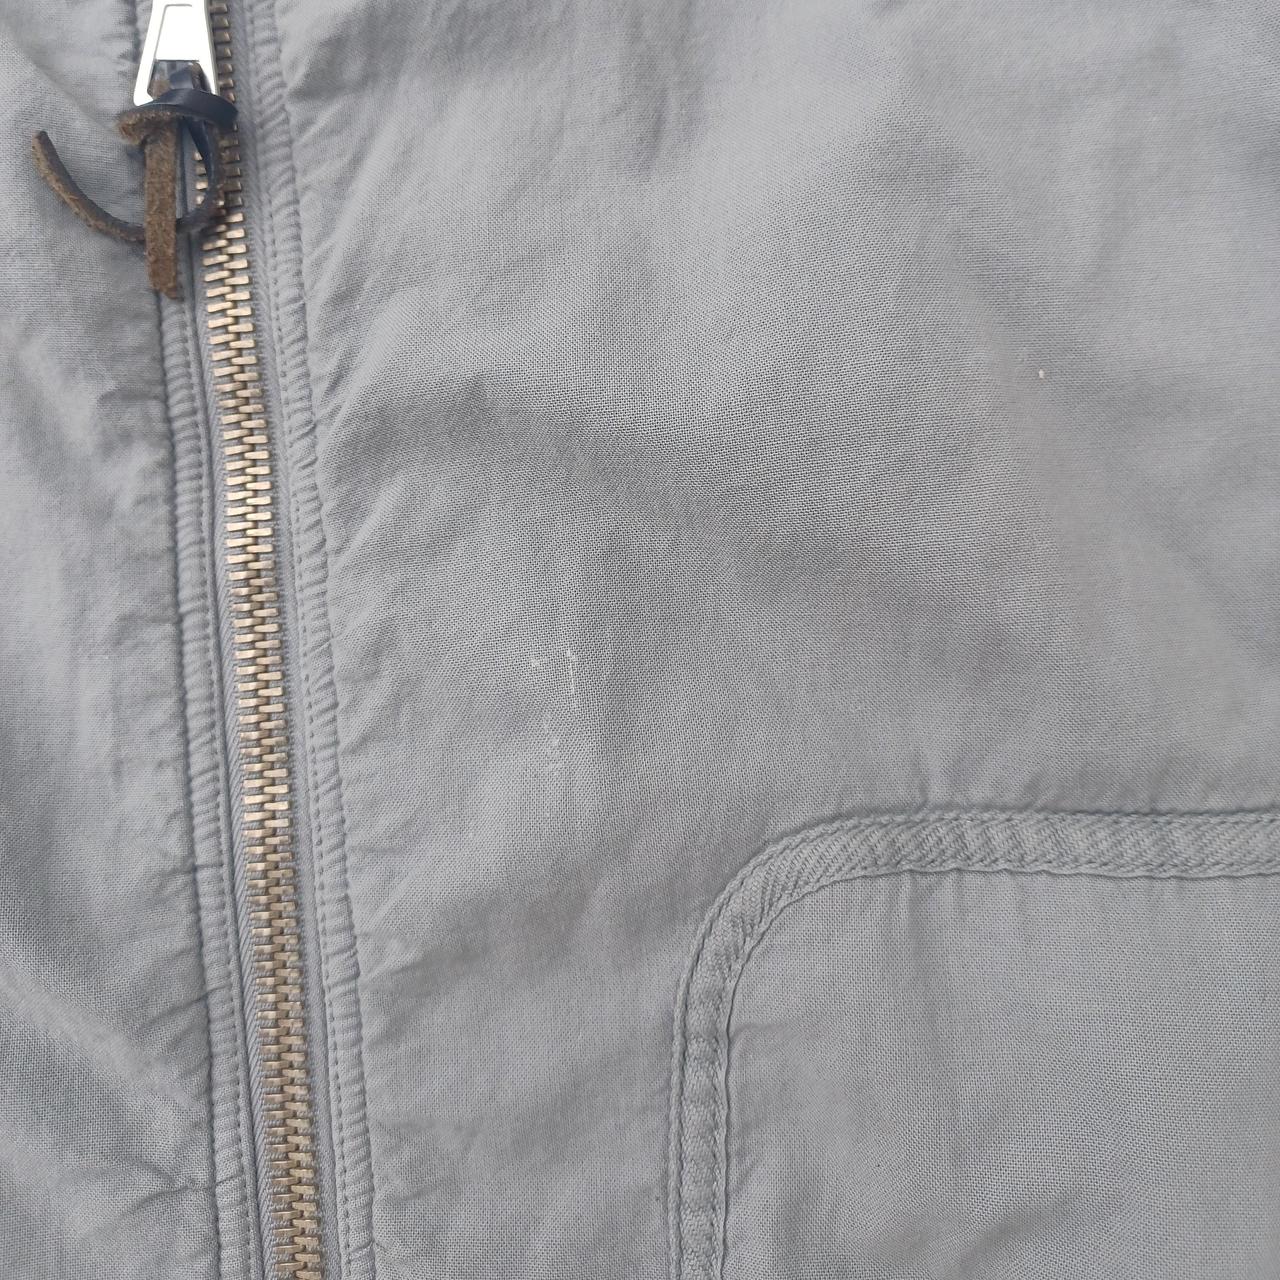 Product Image 3 - Albam bomber jacket. Purchased years